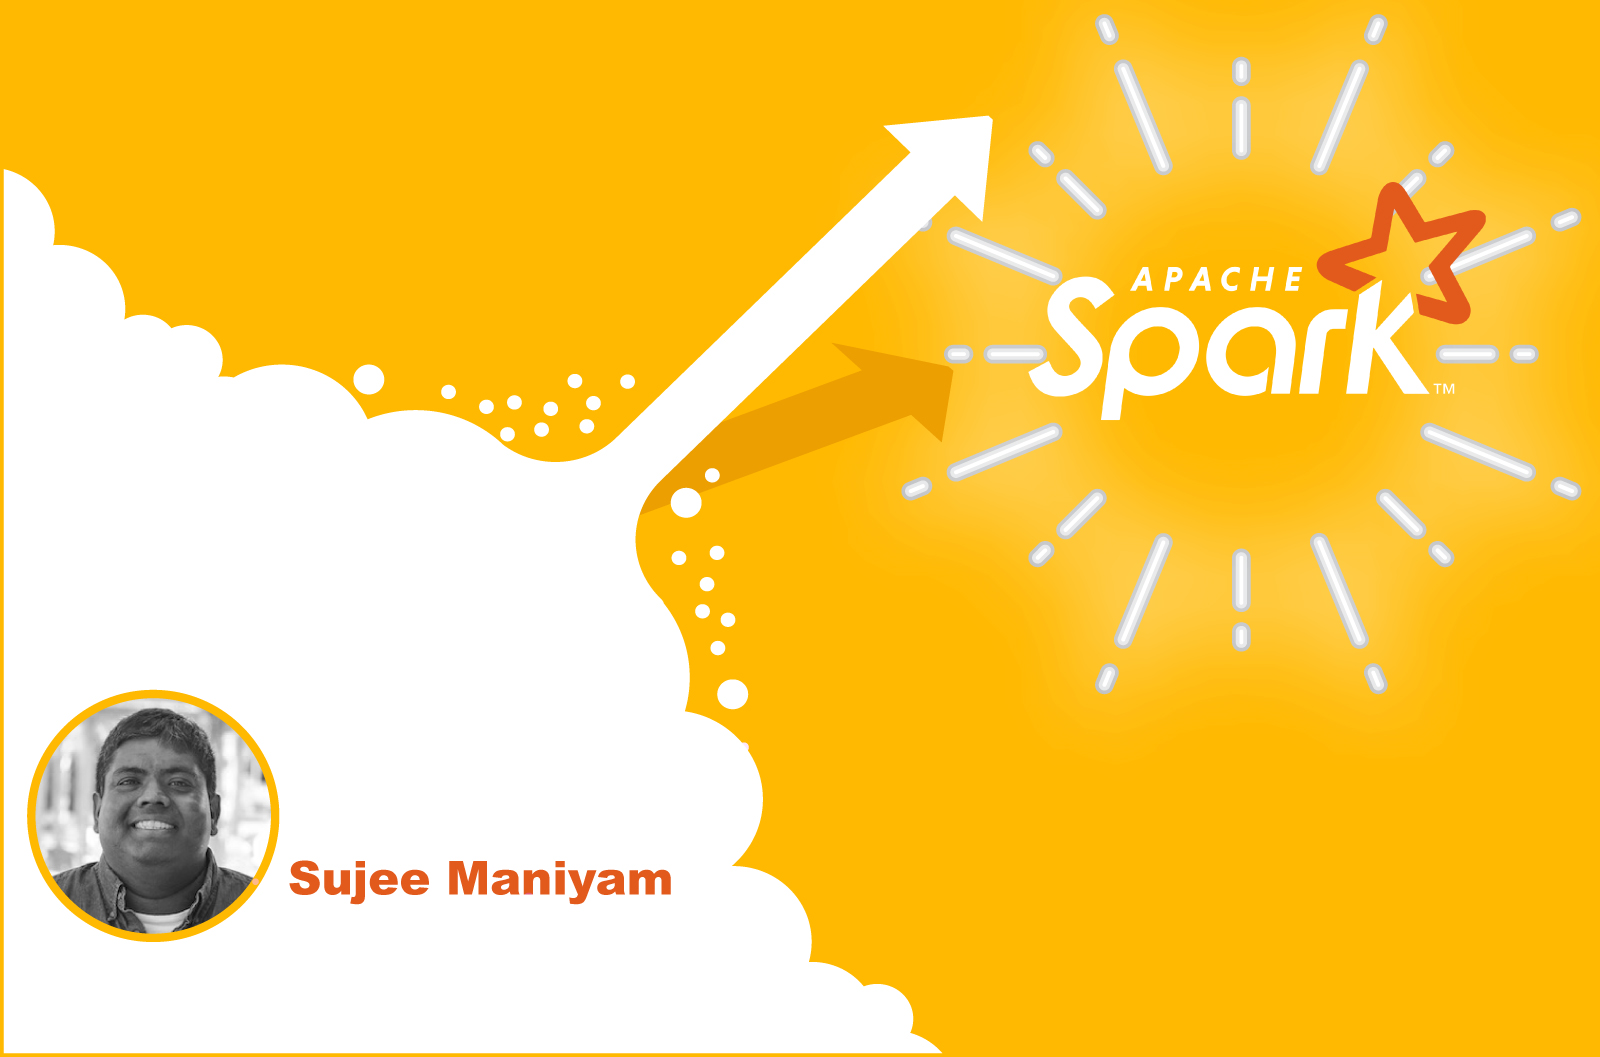 SkilledUp Interviews Sujee Maniyam on Apache Spark